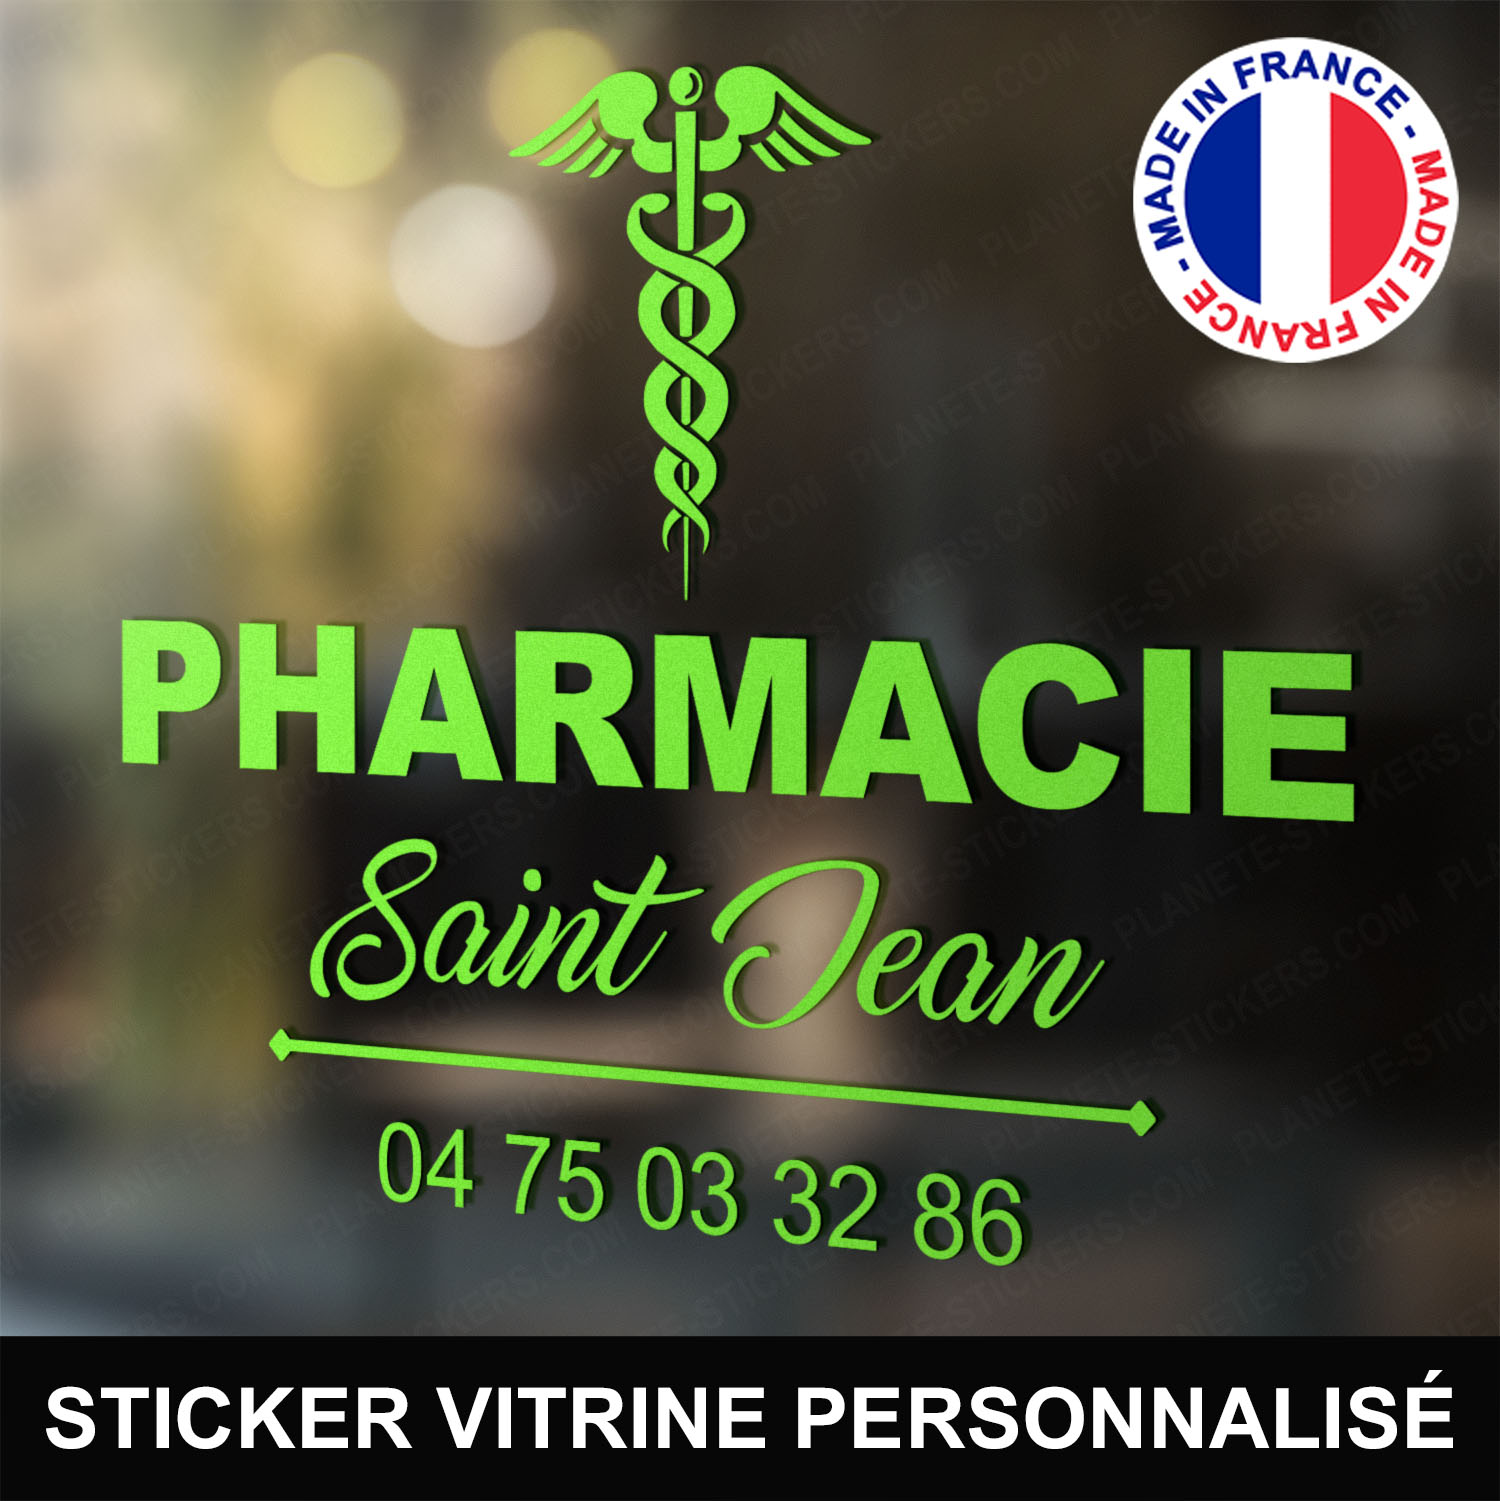 ref4pharmacievitrine-stickers-pharmacie-vitrine-sticker-personnalisé-pharmacien-autocollant-médical-pro-vitre-professionnel-logo-caducée